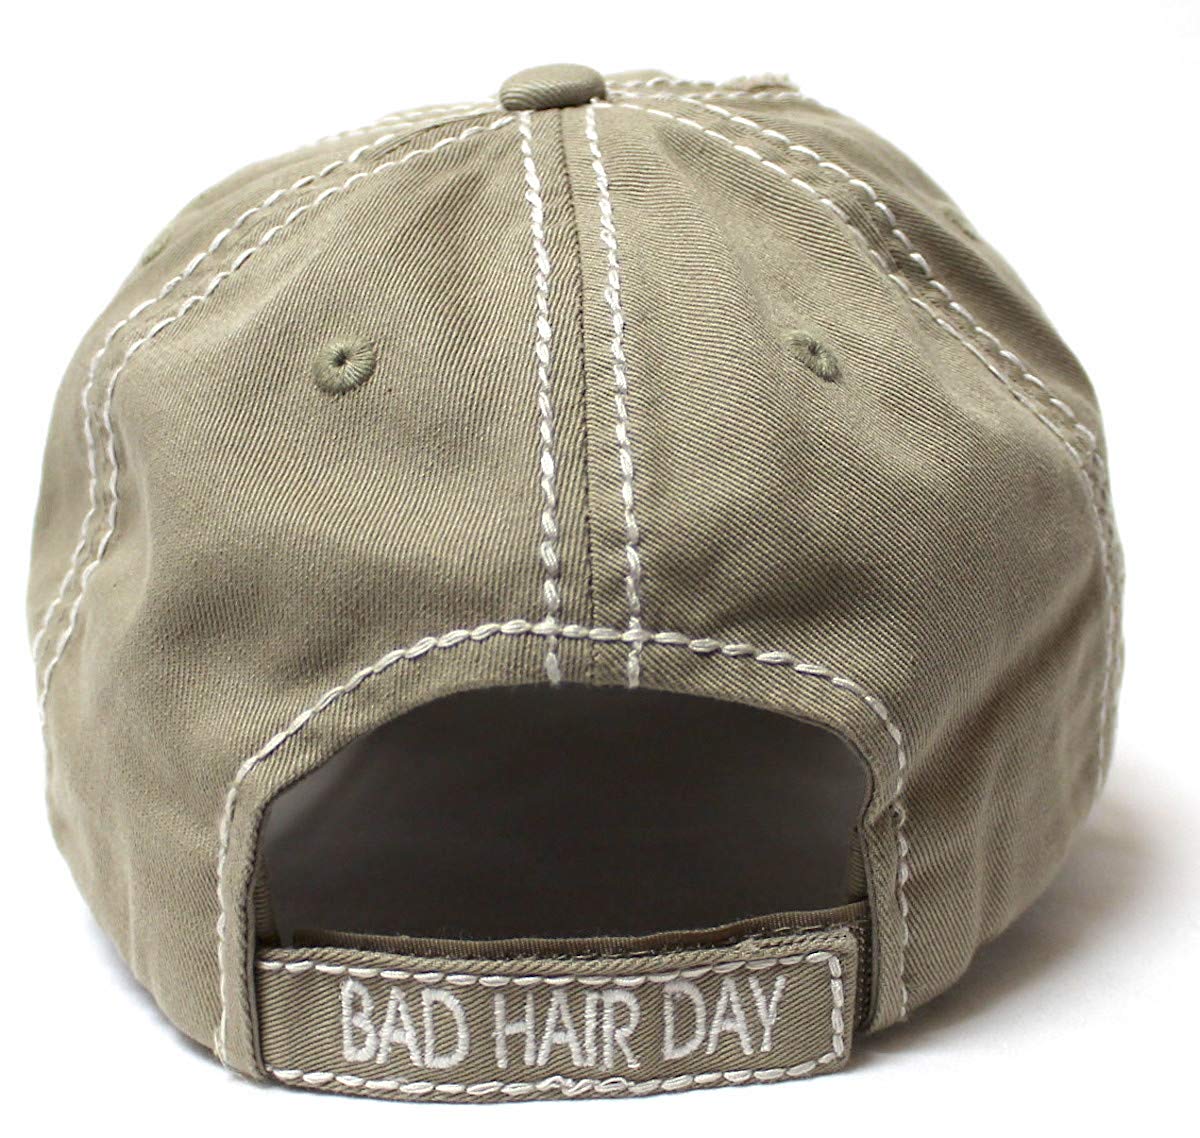 CAPS 'N VINTAGE Bad Hair Day Stitch Embroidery Distressed Baseball Hat, Khaki - Caps 'N Vintage 